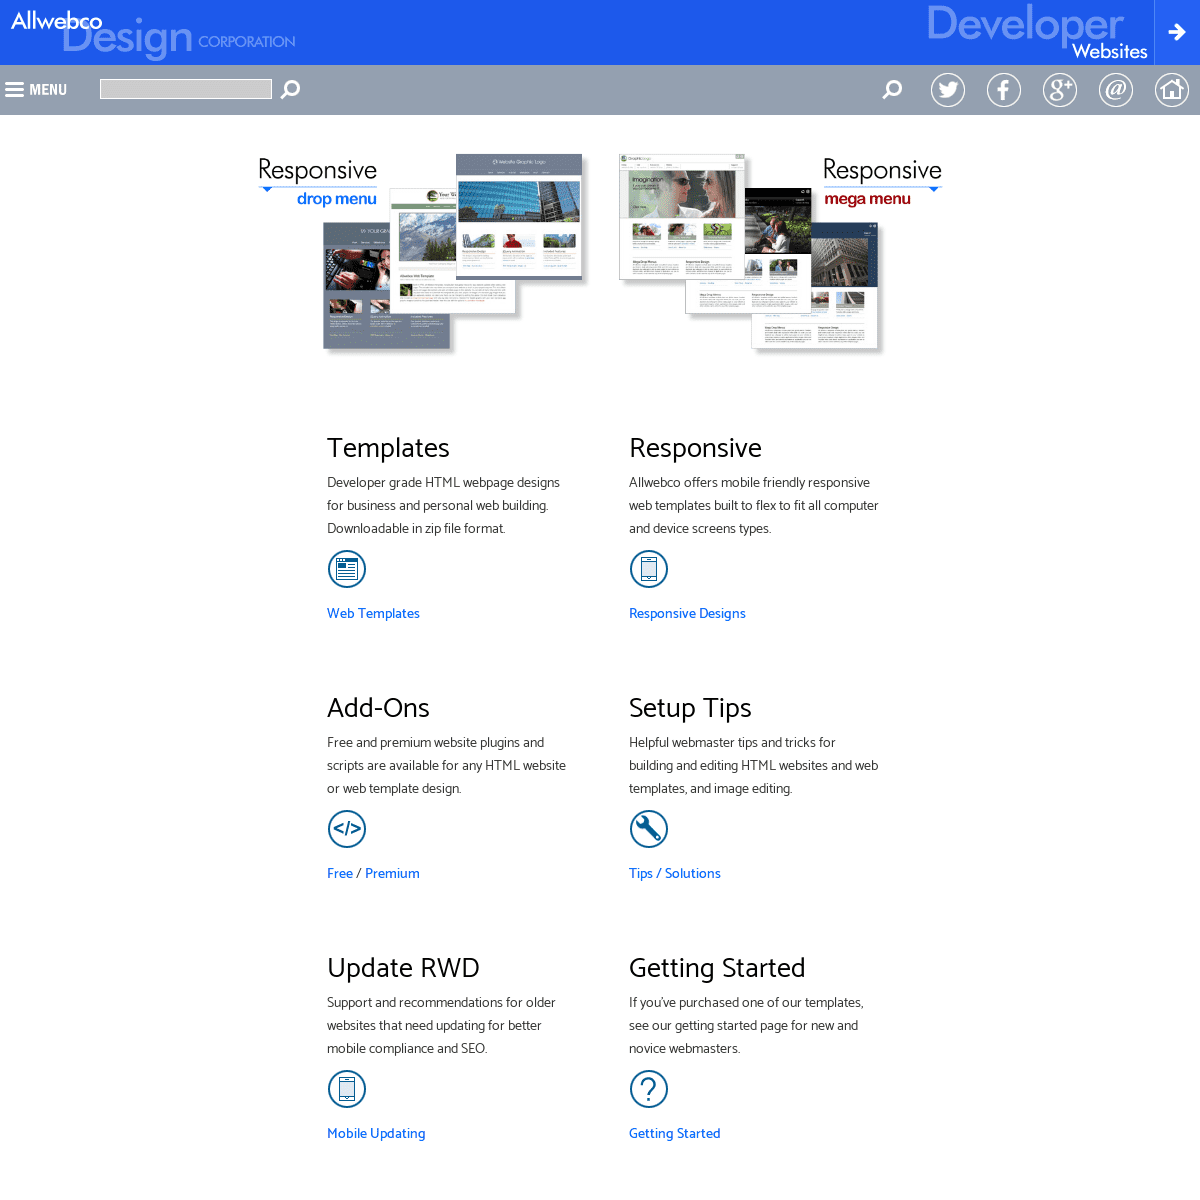 A complete backup of allwebco-templates.com